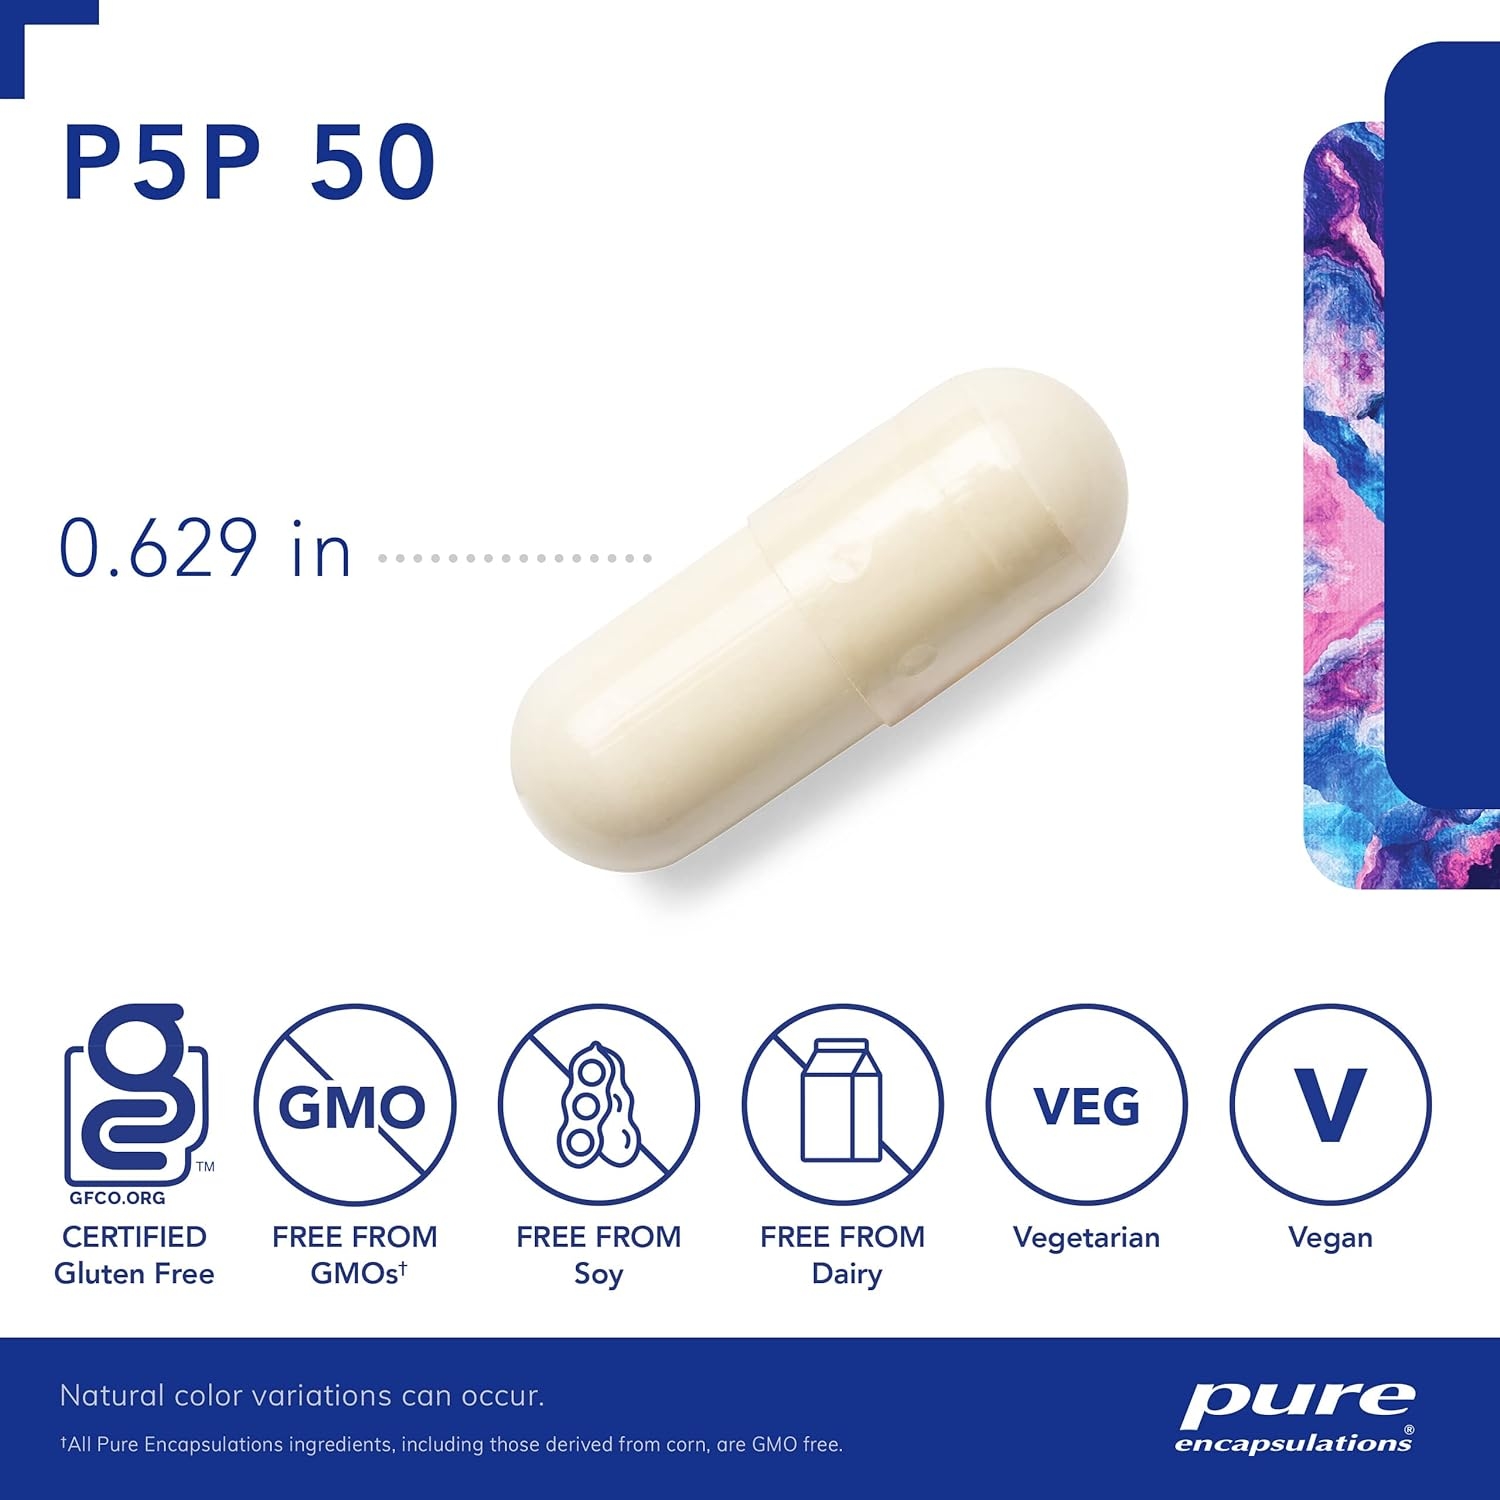 Pure Encapsulations P5P 50 | Vitamin B6 Supplement to Support Metabolism* | 60 Capsules